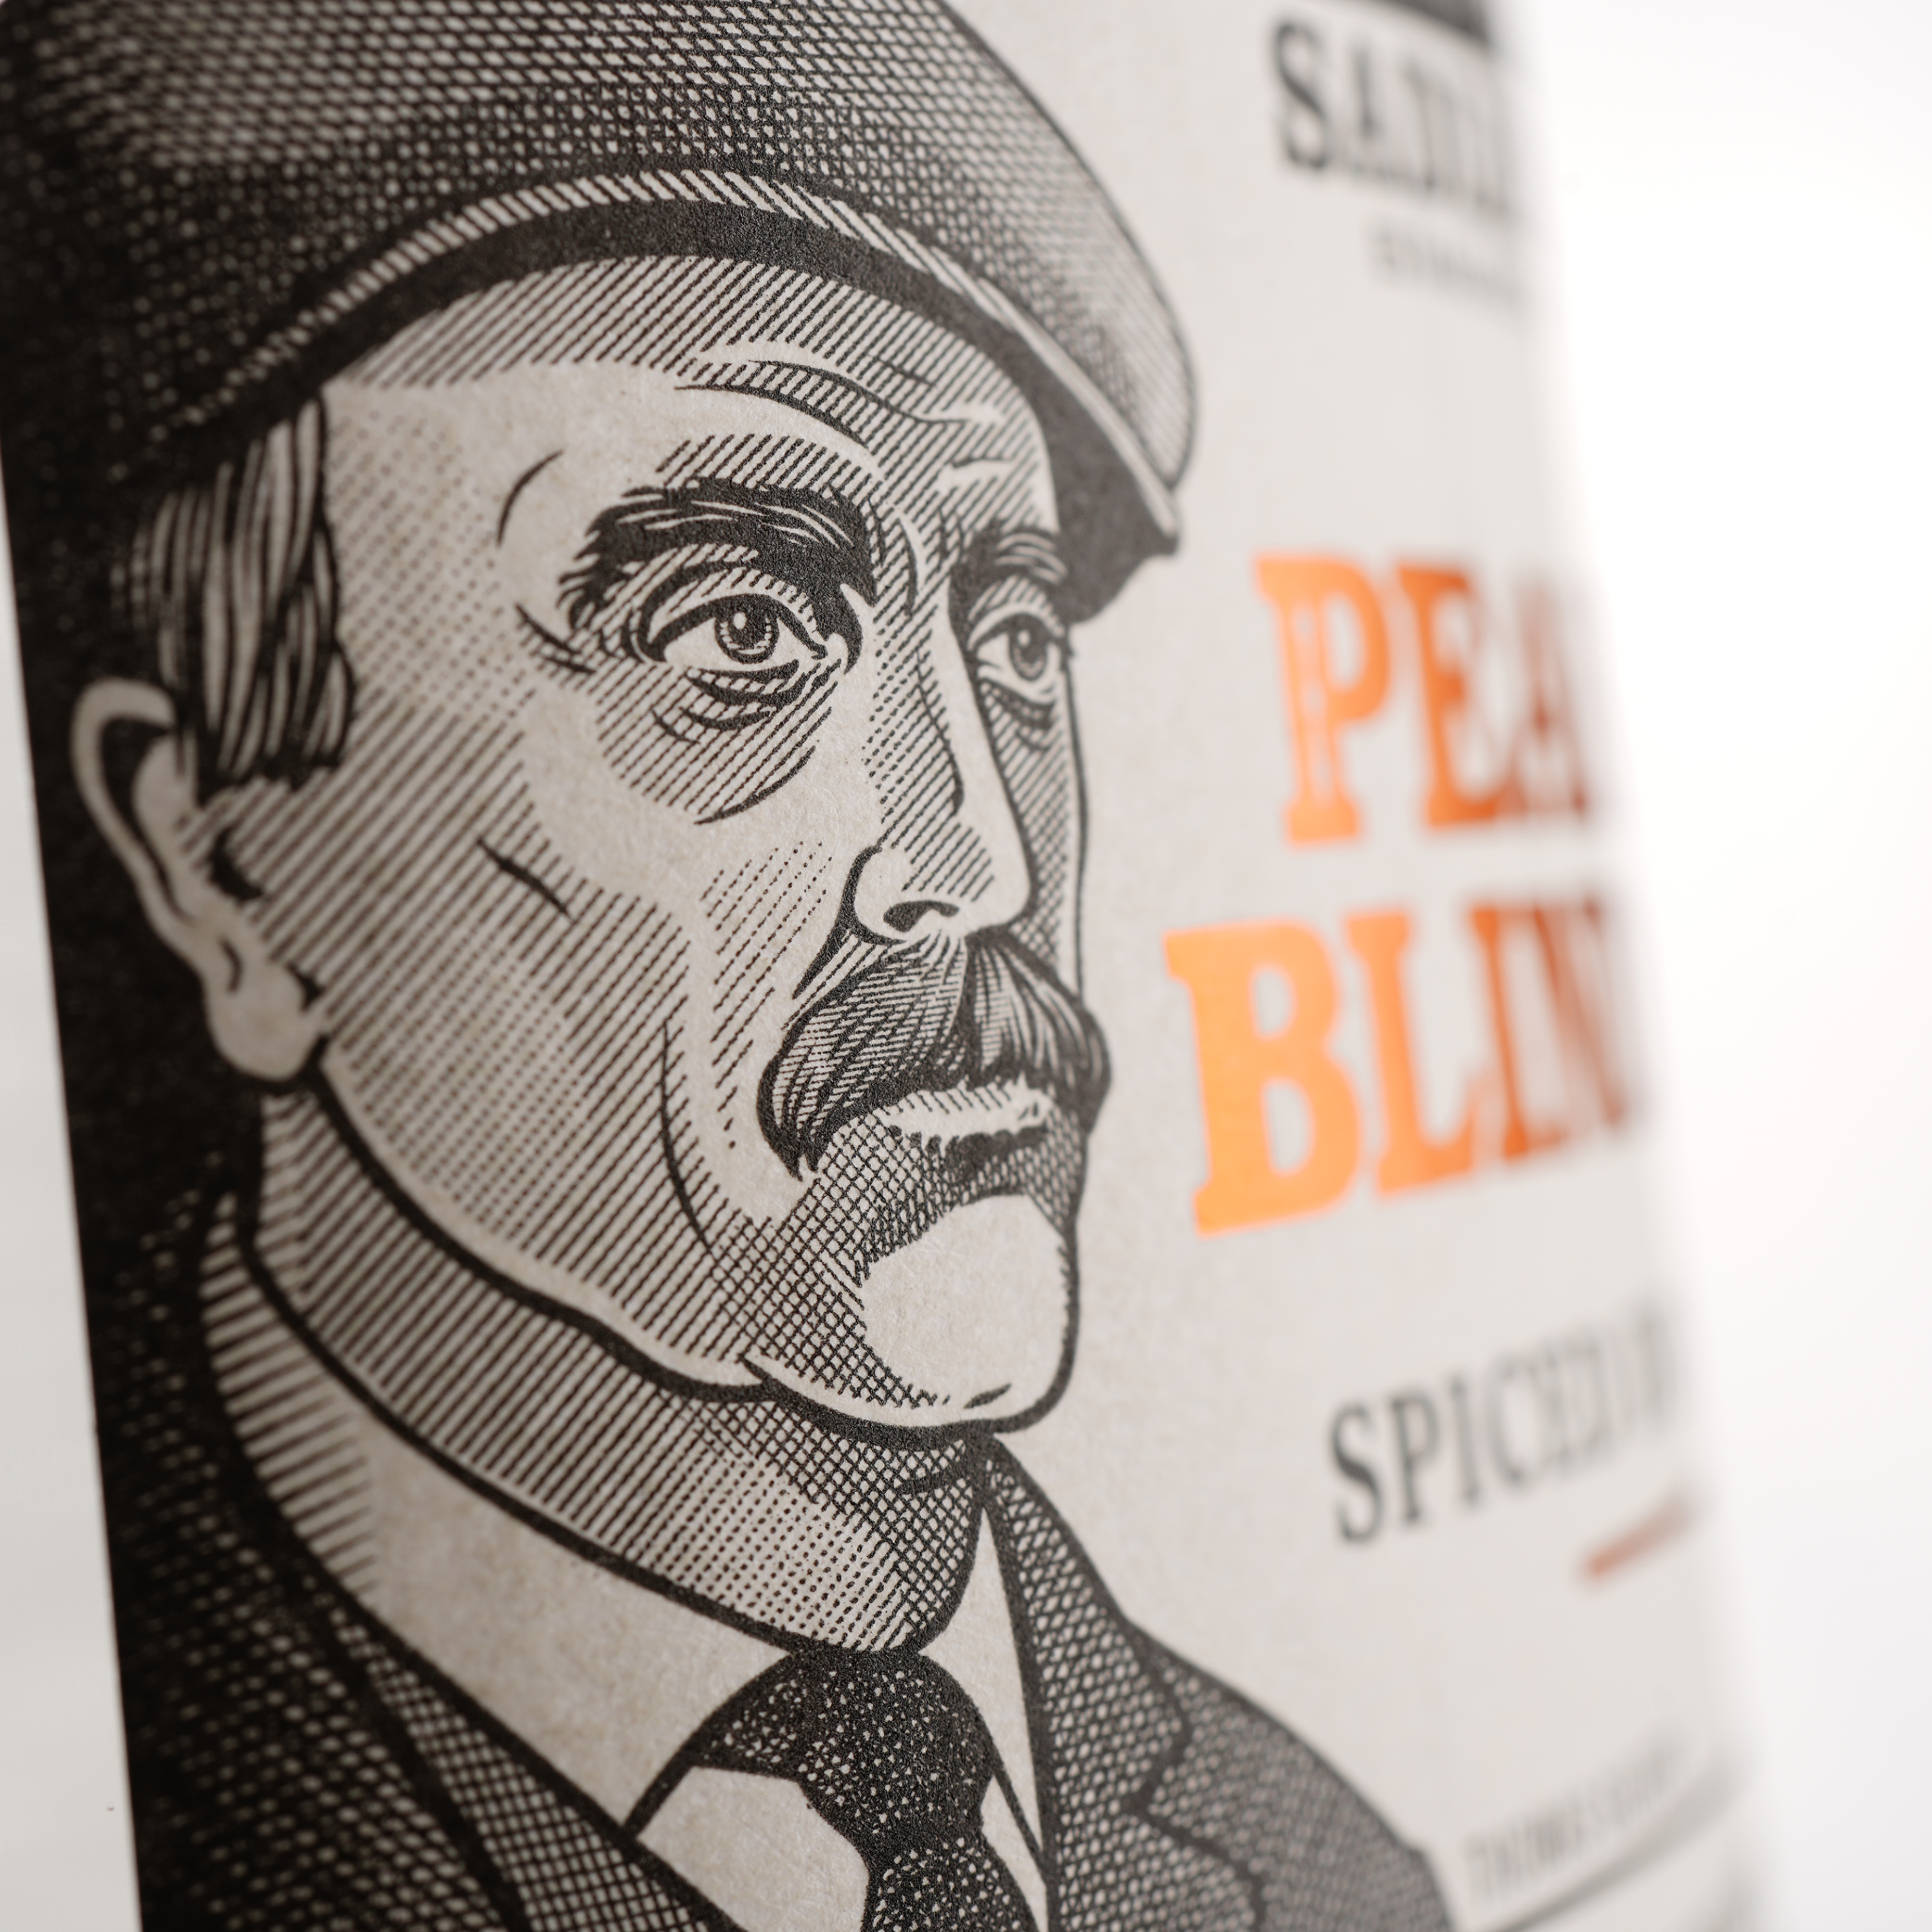 Джин Peaky Blinder Spiced Dry Gin, 40%, 0,7 л - фото 3